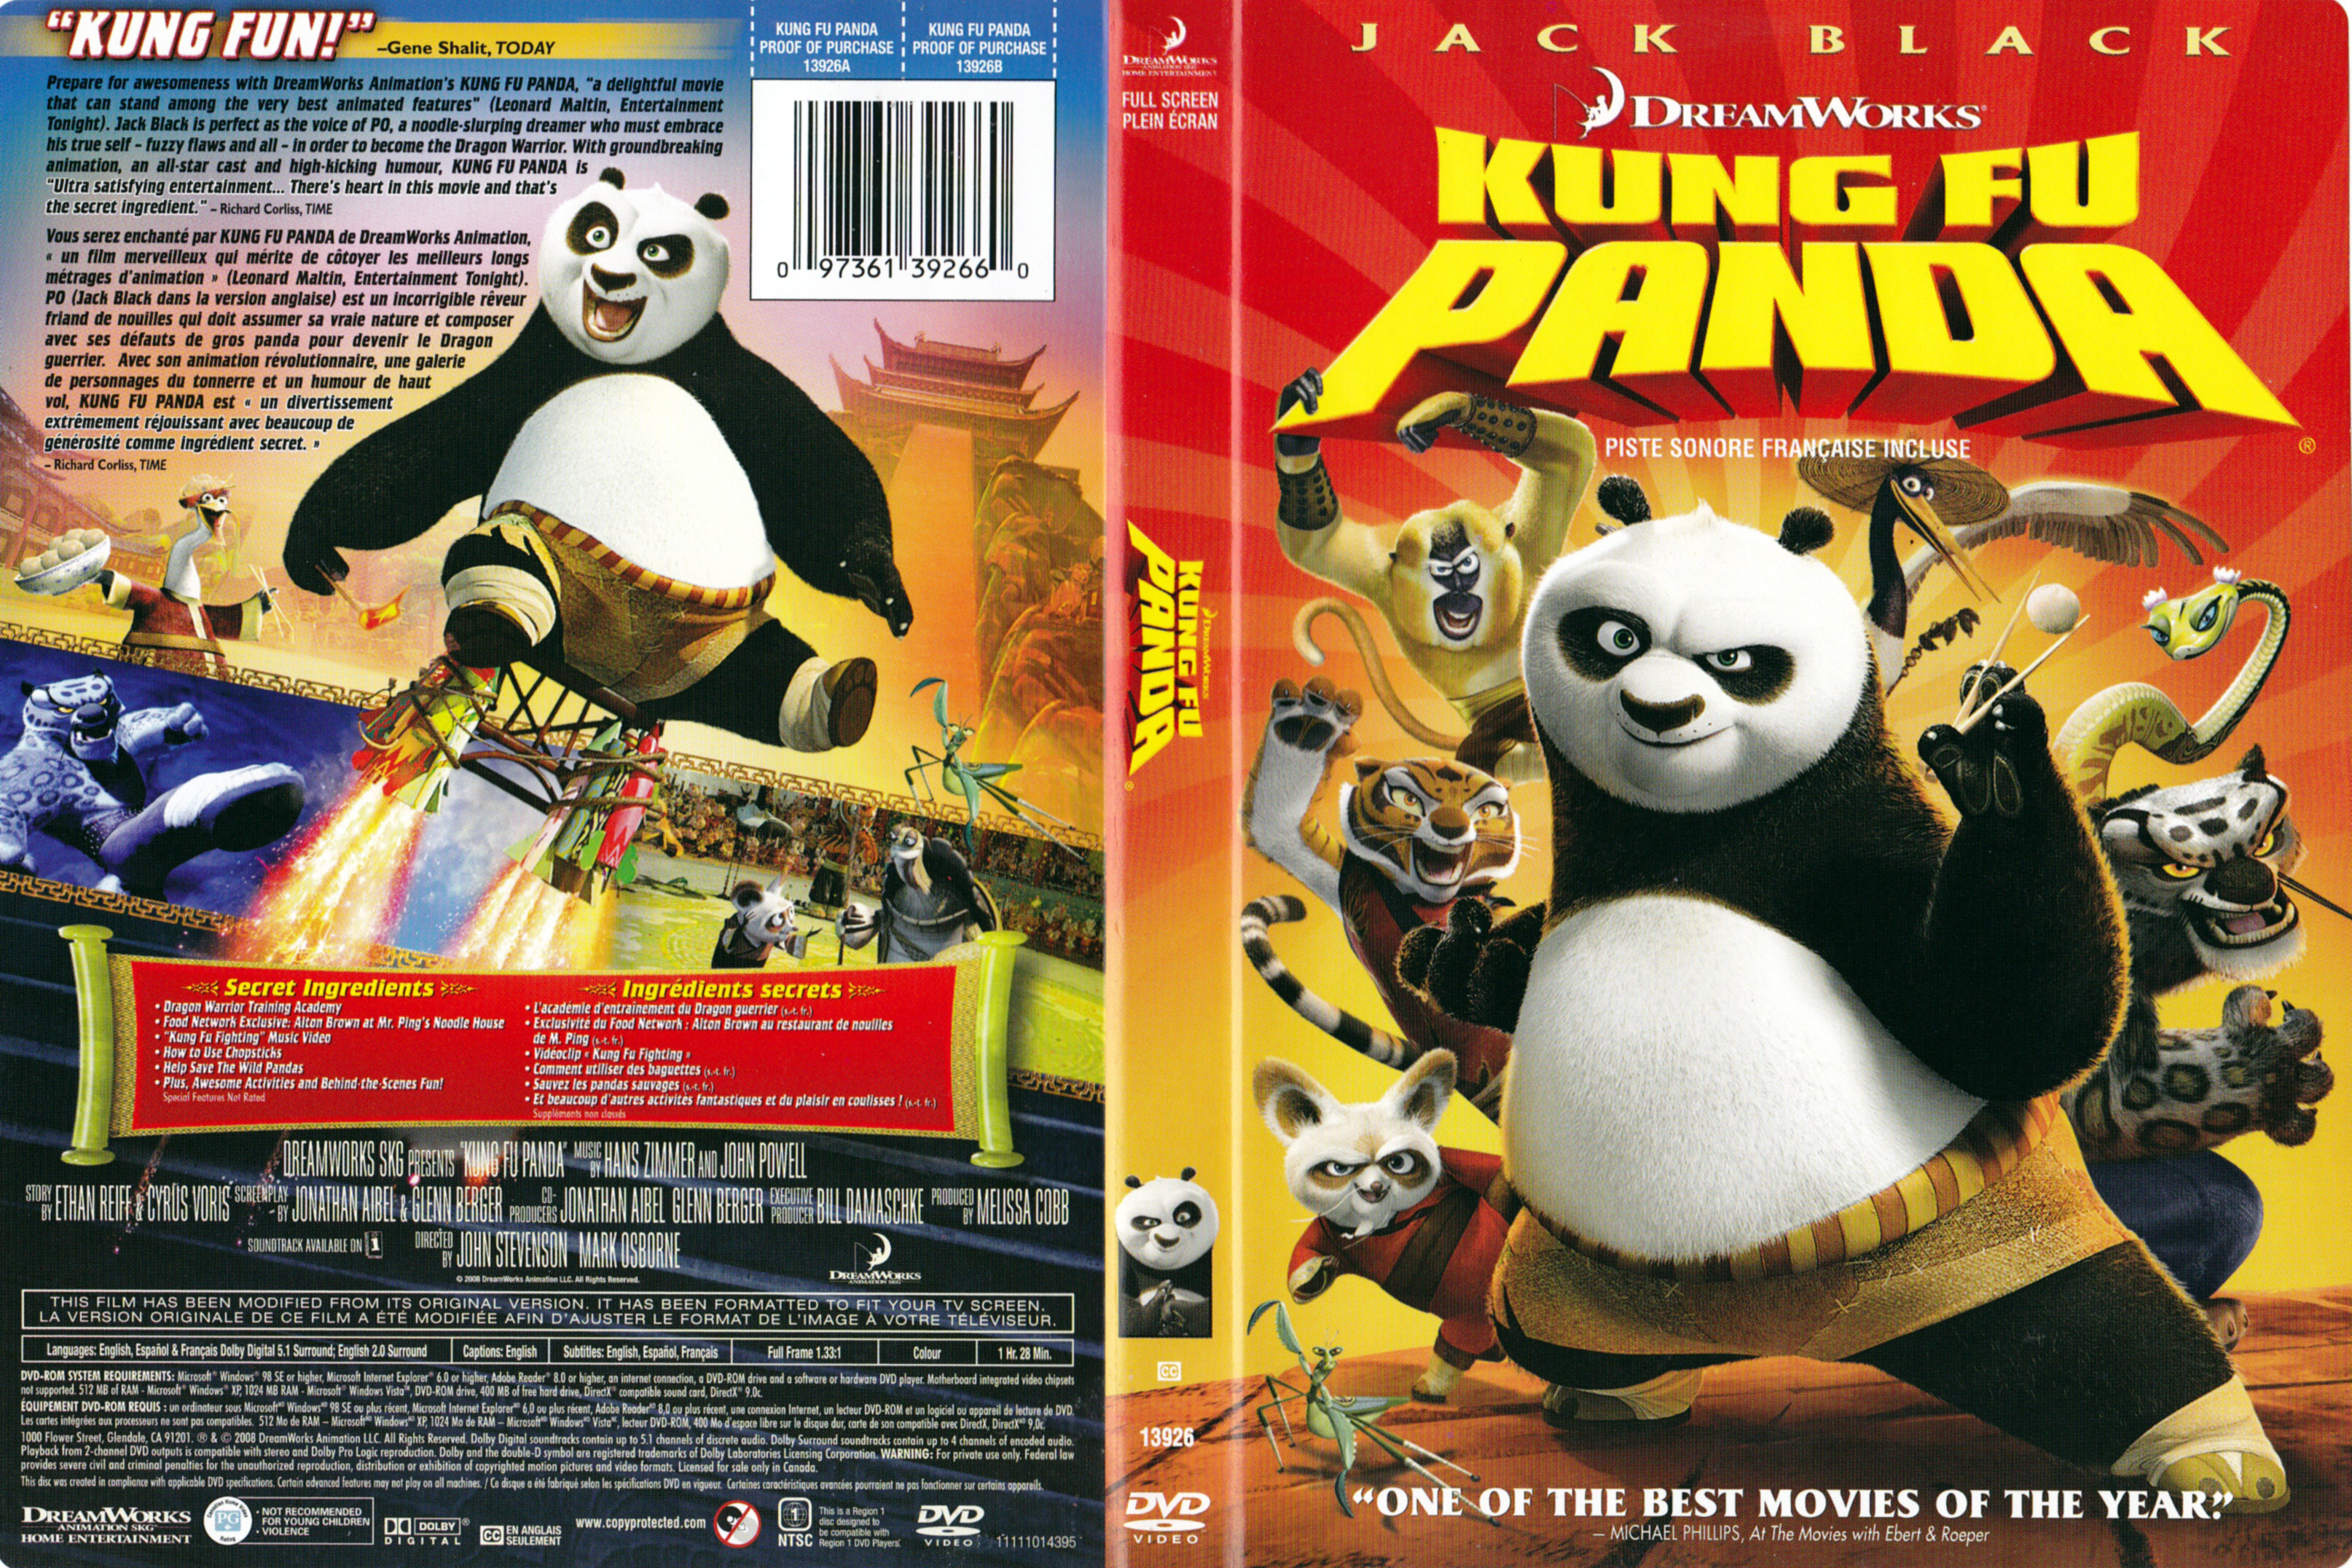 Jaquette DVD Kung fu panda (Canadienne)